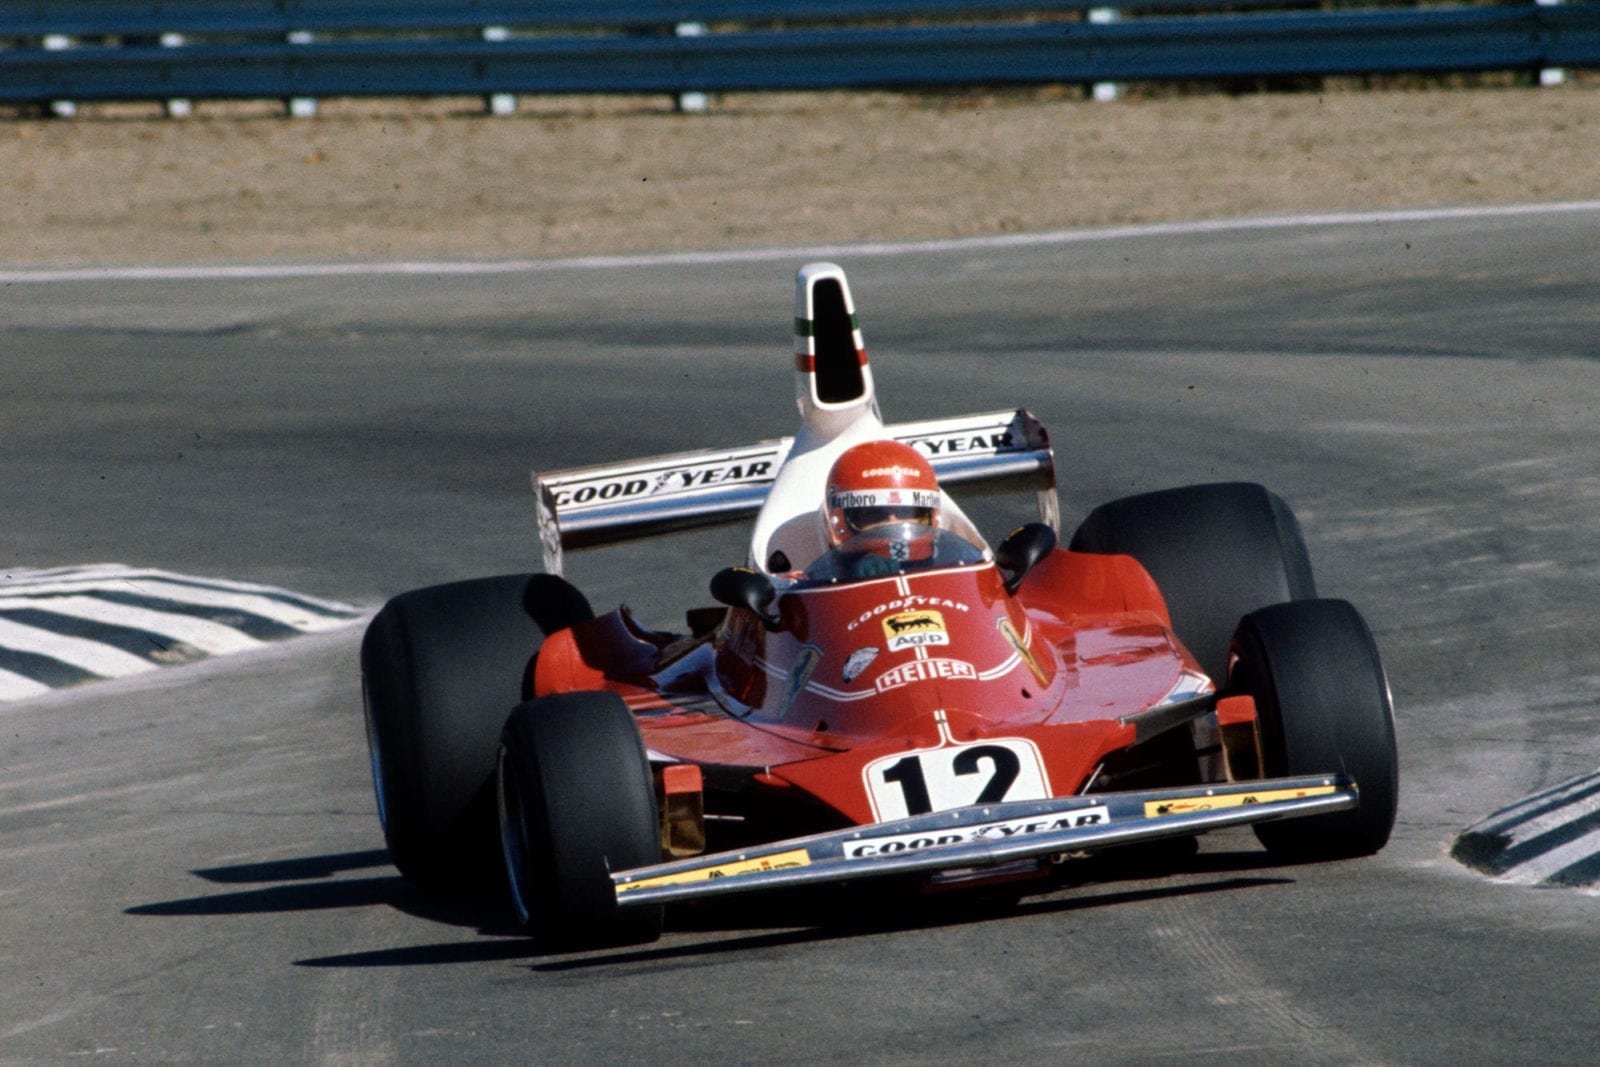 Niki Lauda (Ferrari) driving at the 1975 United States Grand Prix, Watkins Glen.